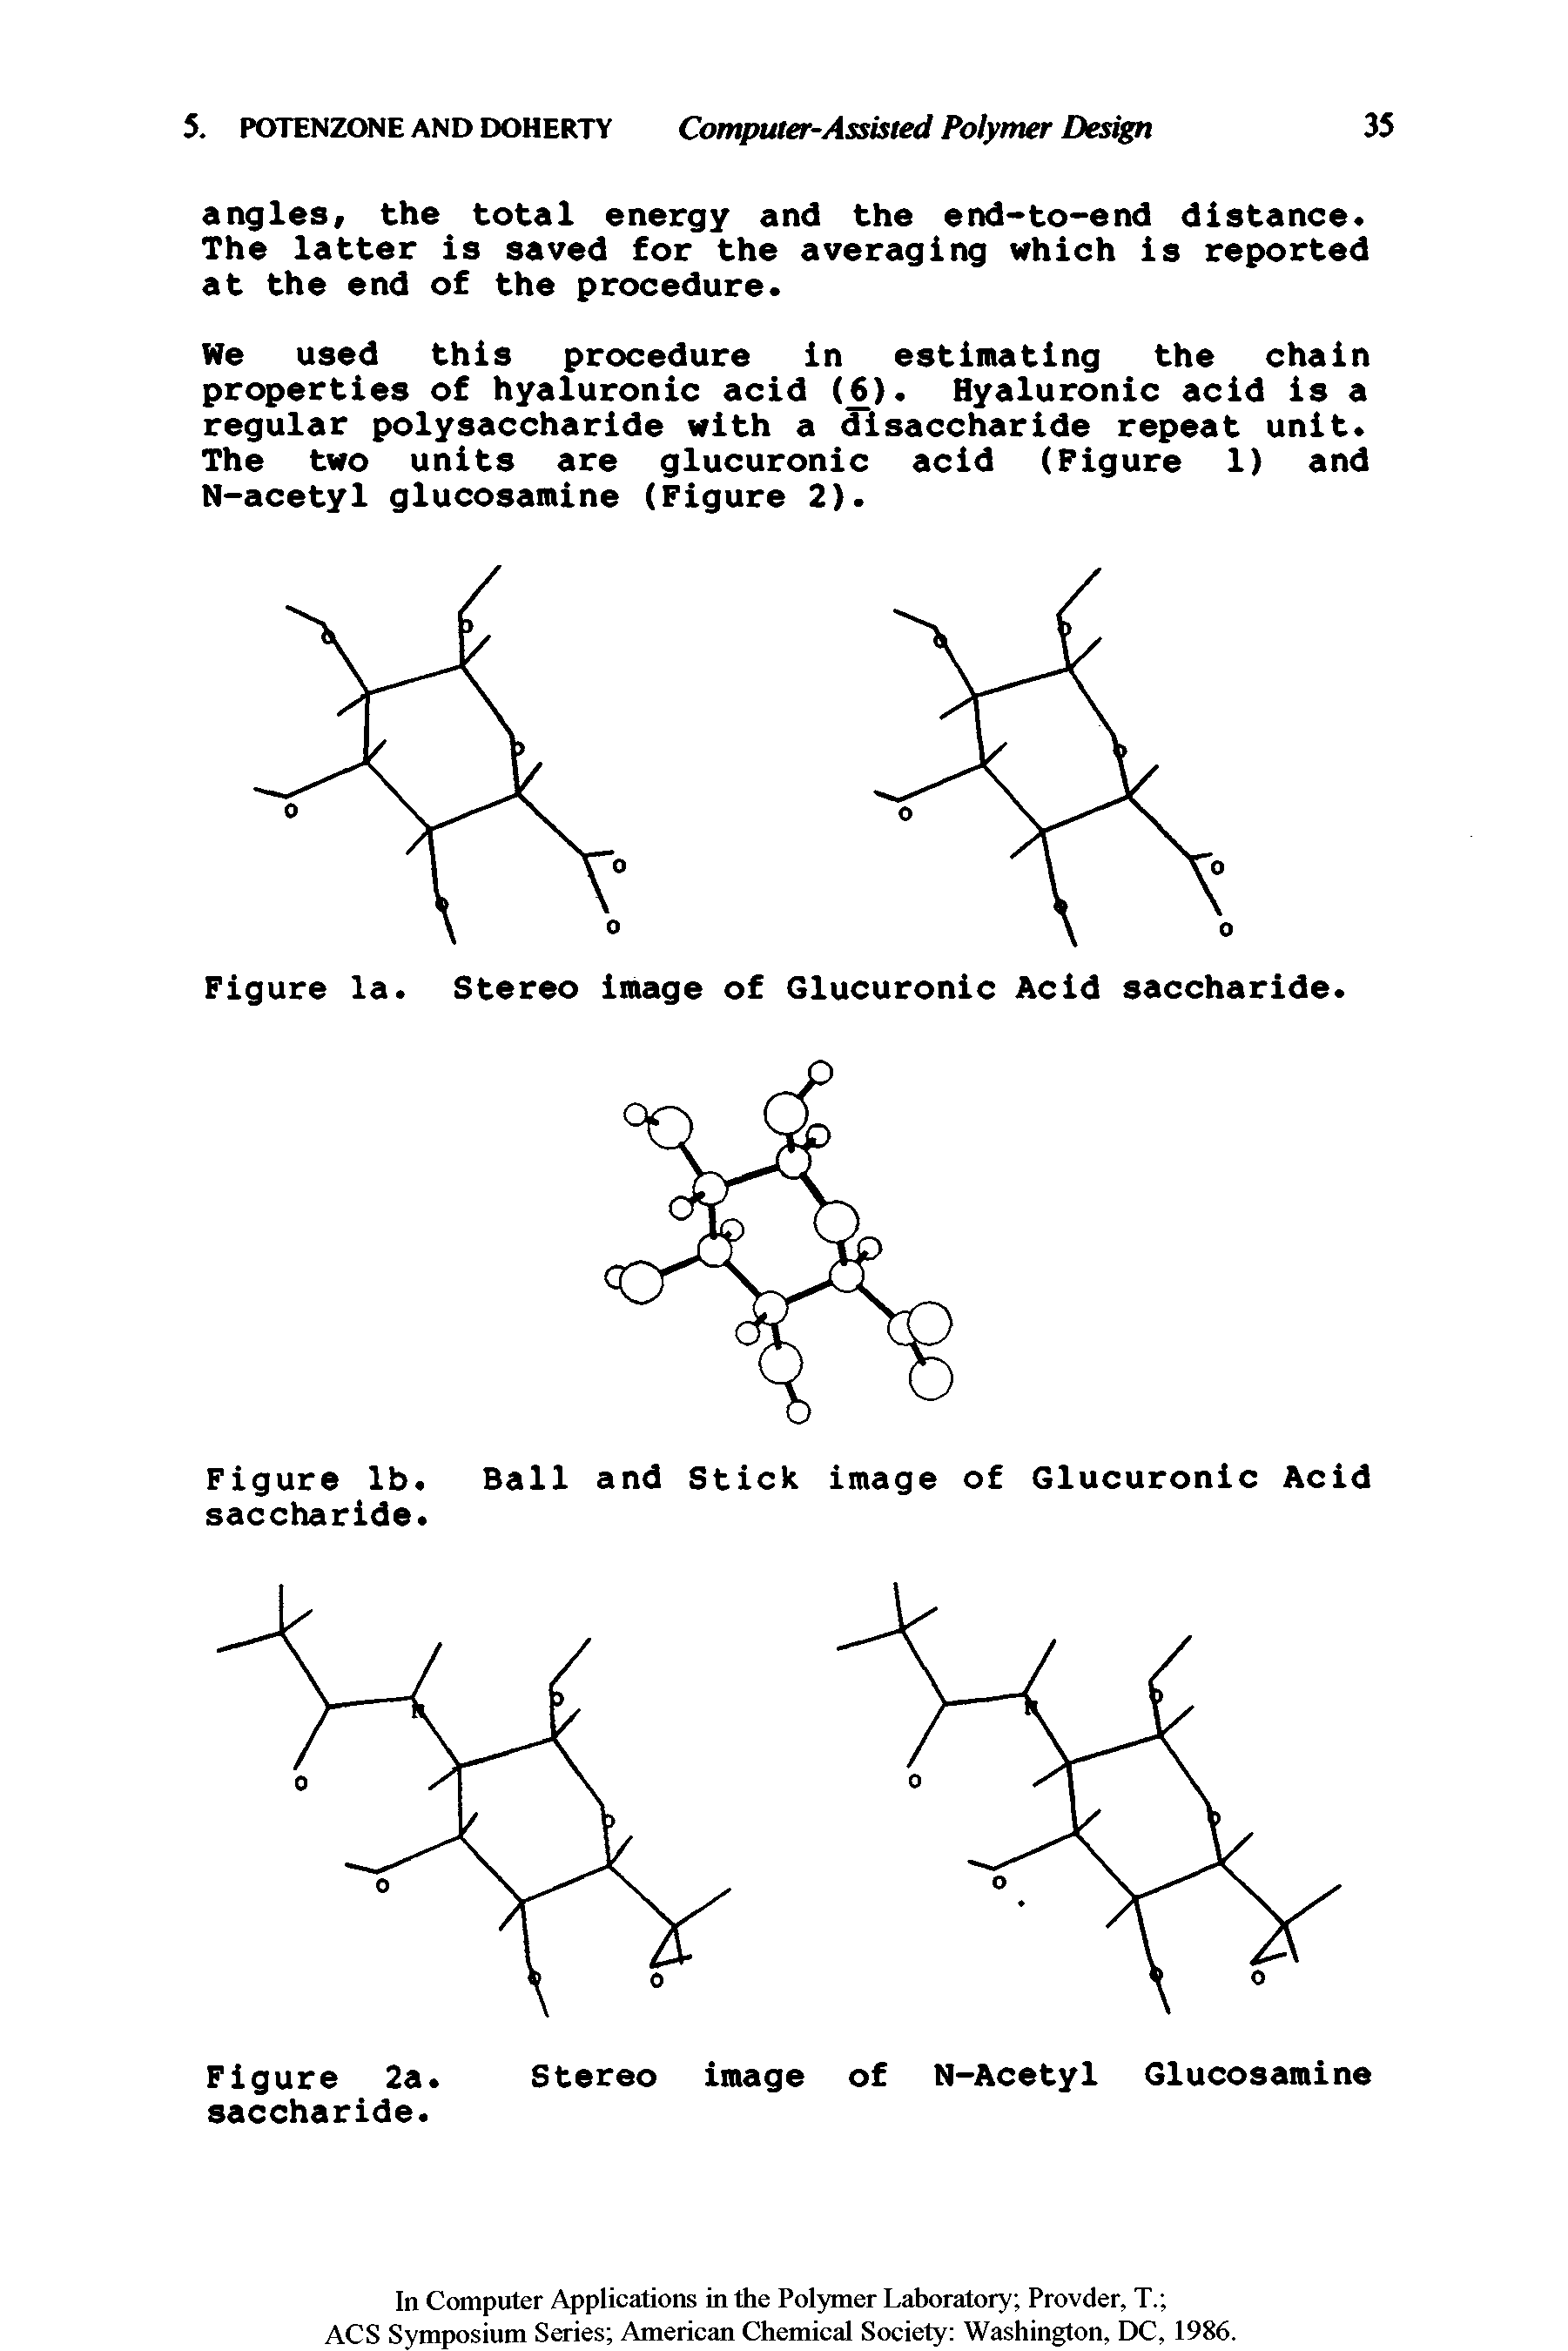 Figure 2a. Stereo image of N-Acetyl Glucosamine saccharide.